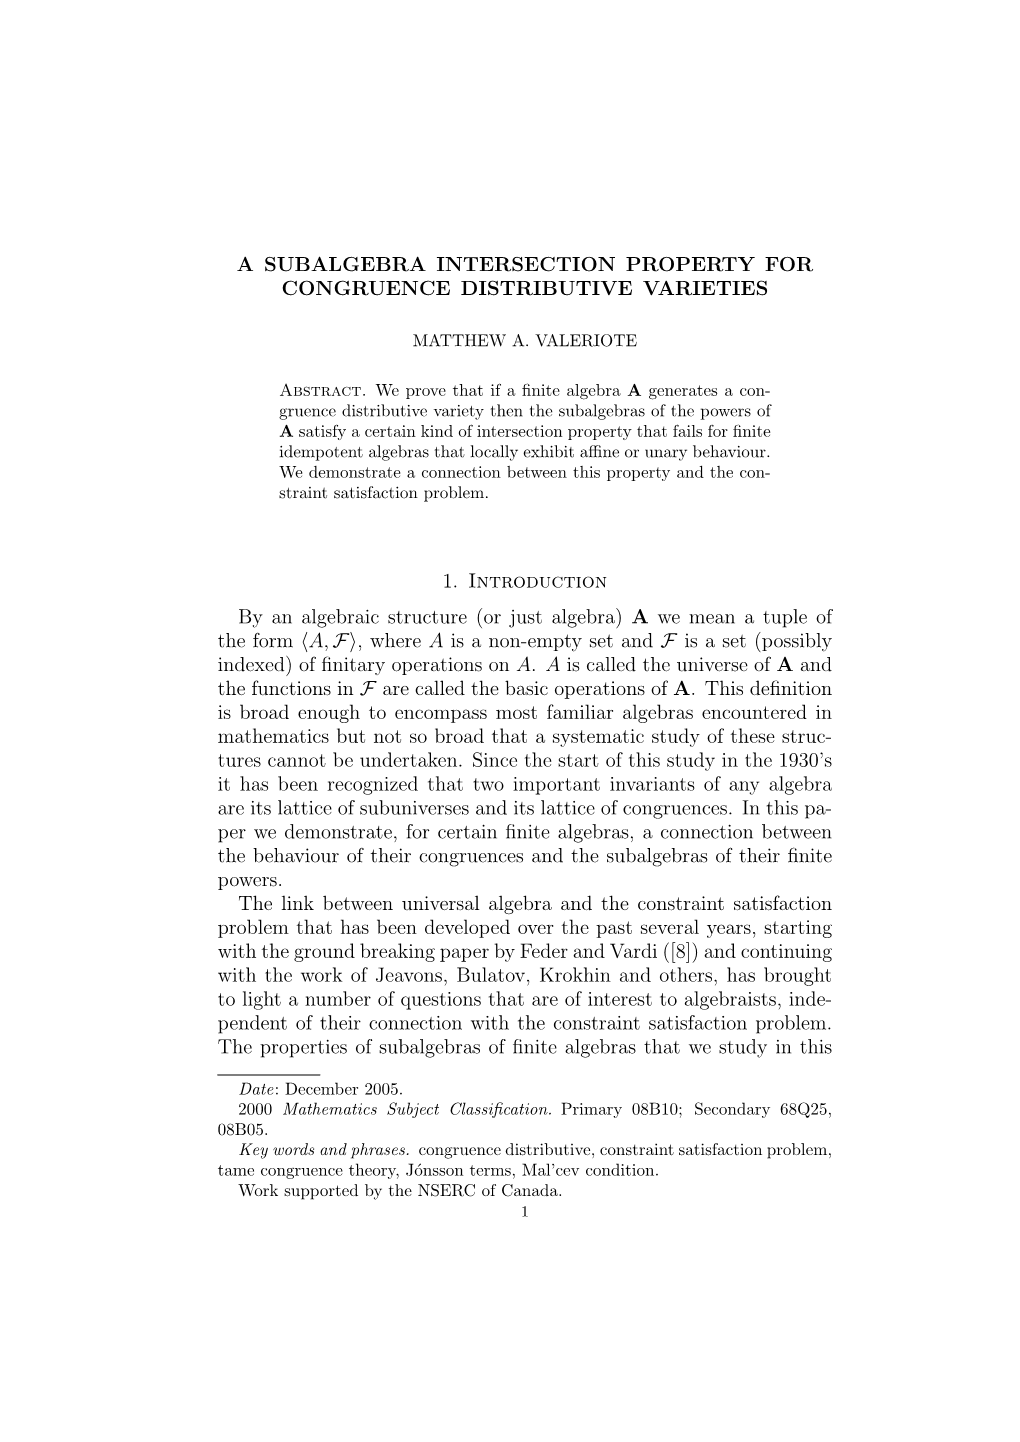 A Subalgebra Intersection Property for Congruence Distributive Varieties